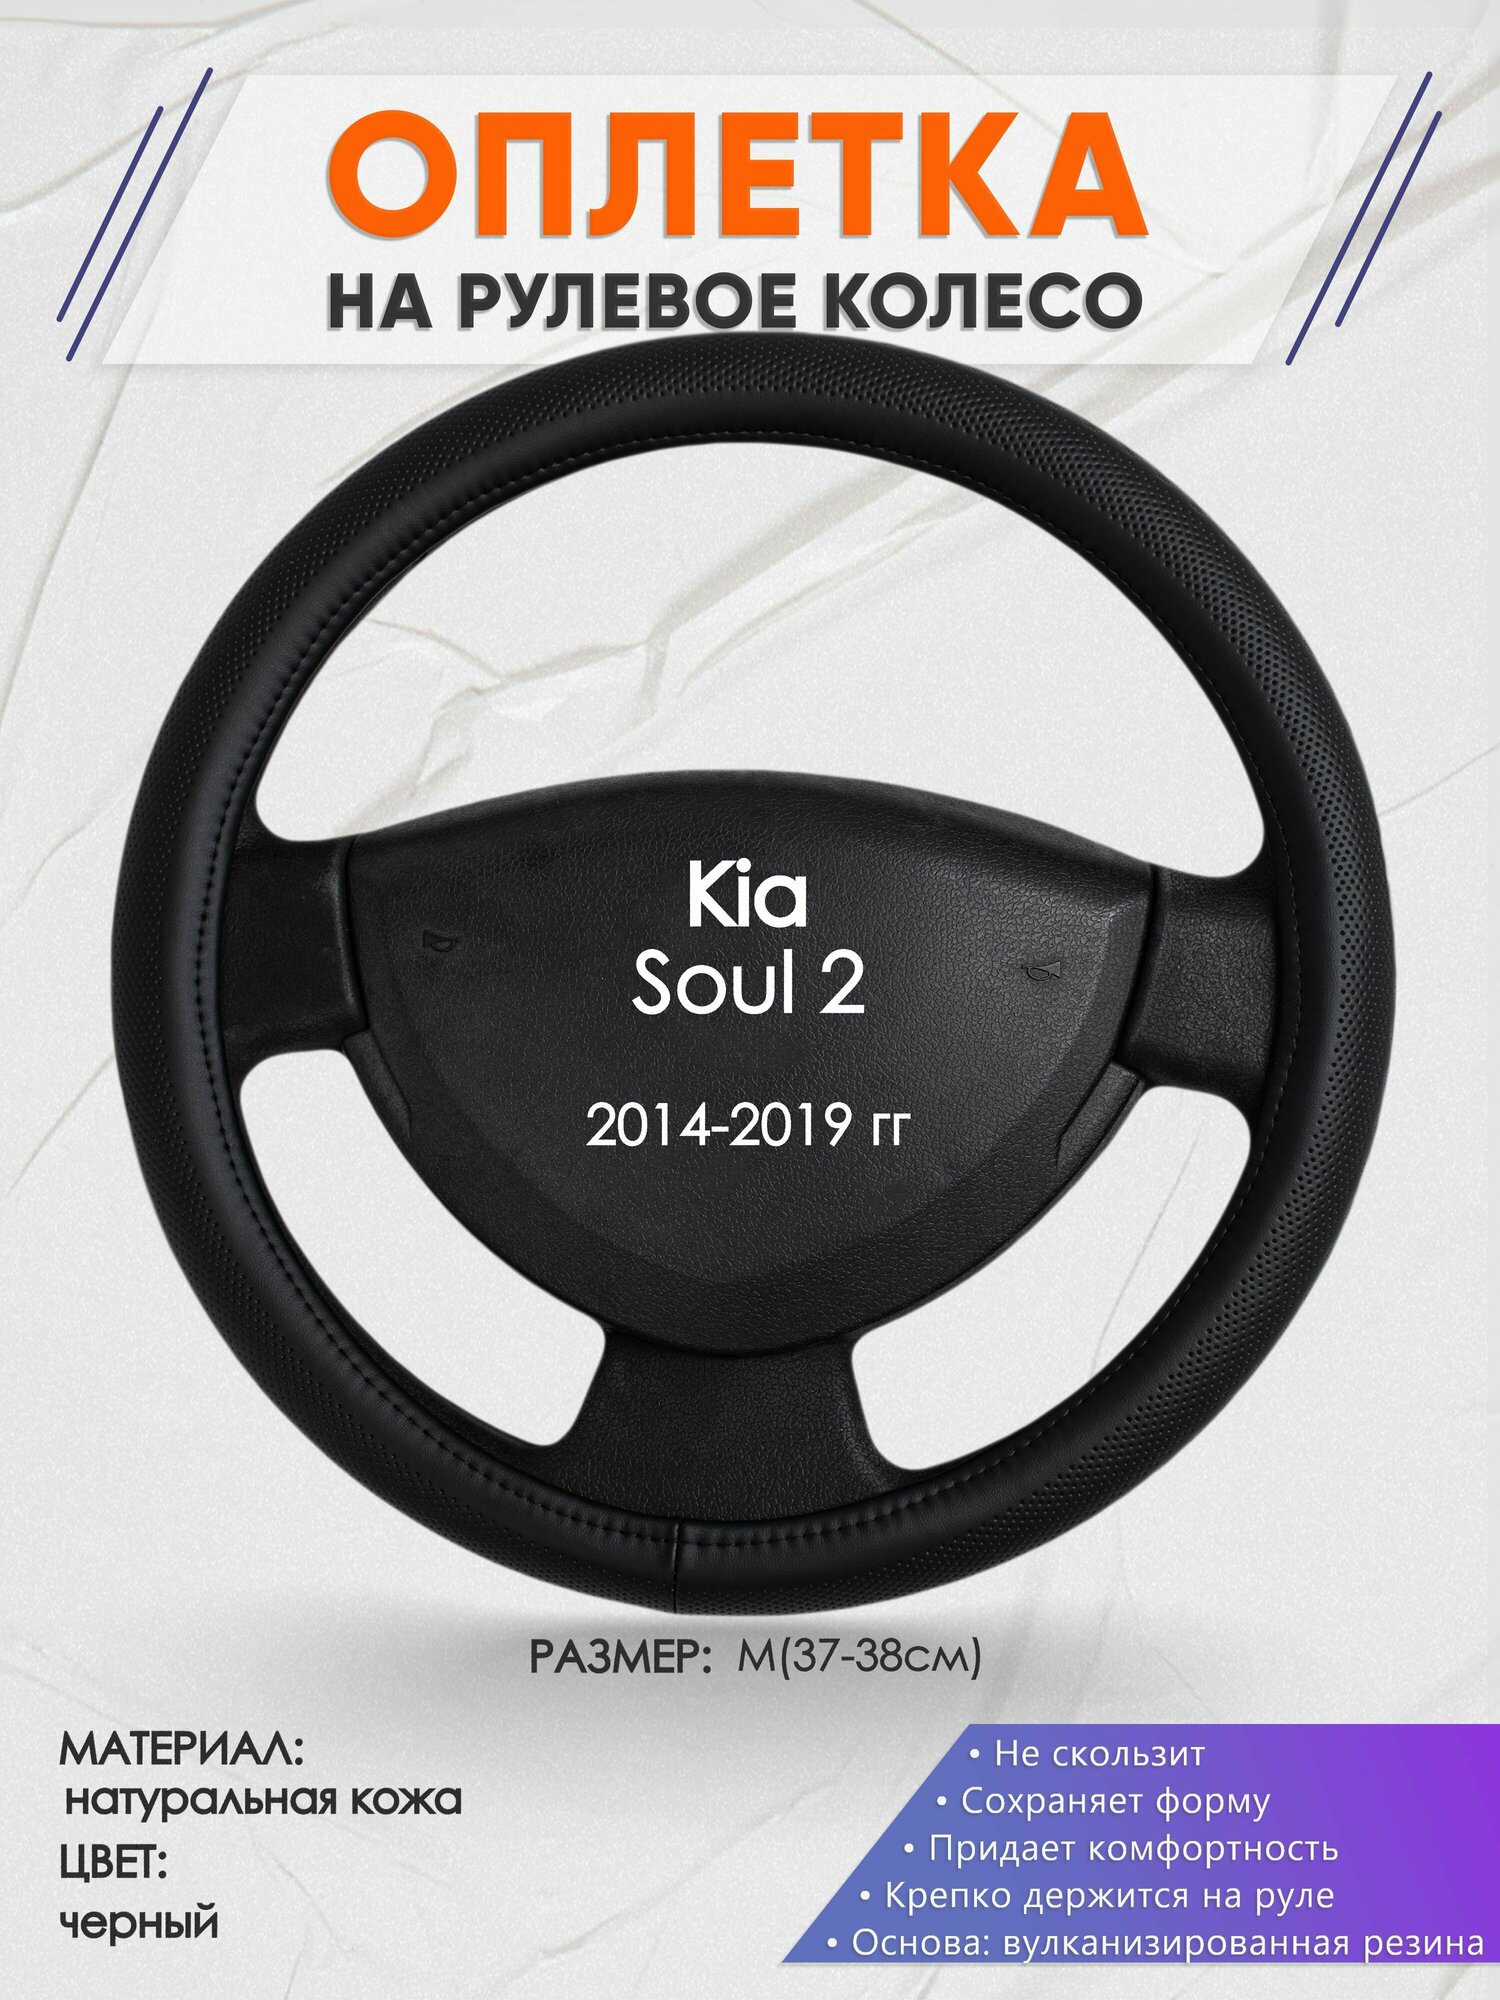 Оплетка на руль для Kia Soul 2(Киа Соул 2) 2014-2019 M(37-38см) Натуральная кожа 22